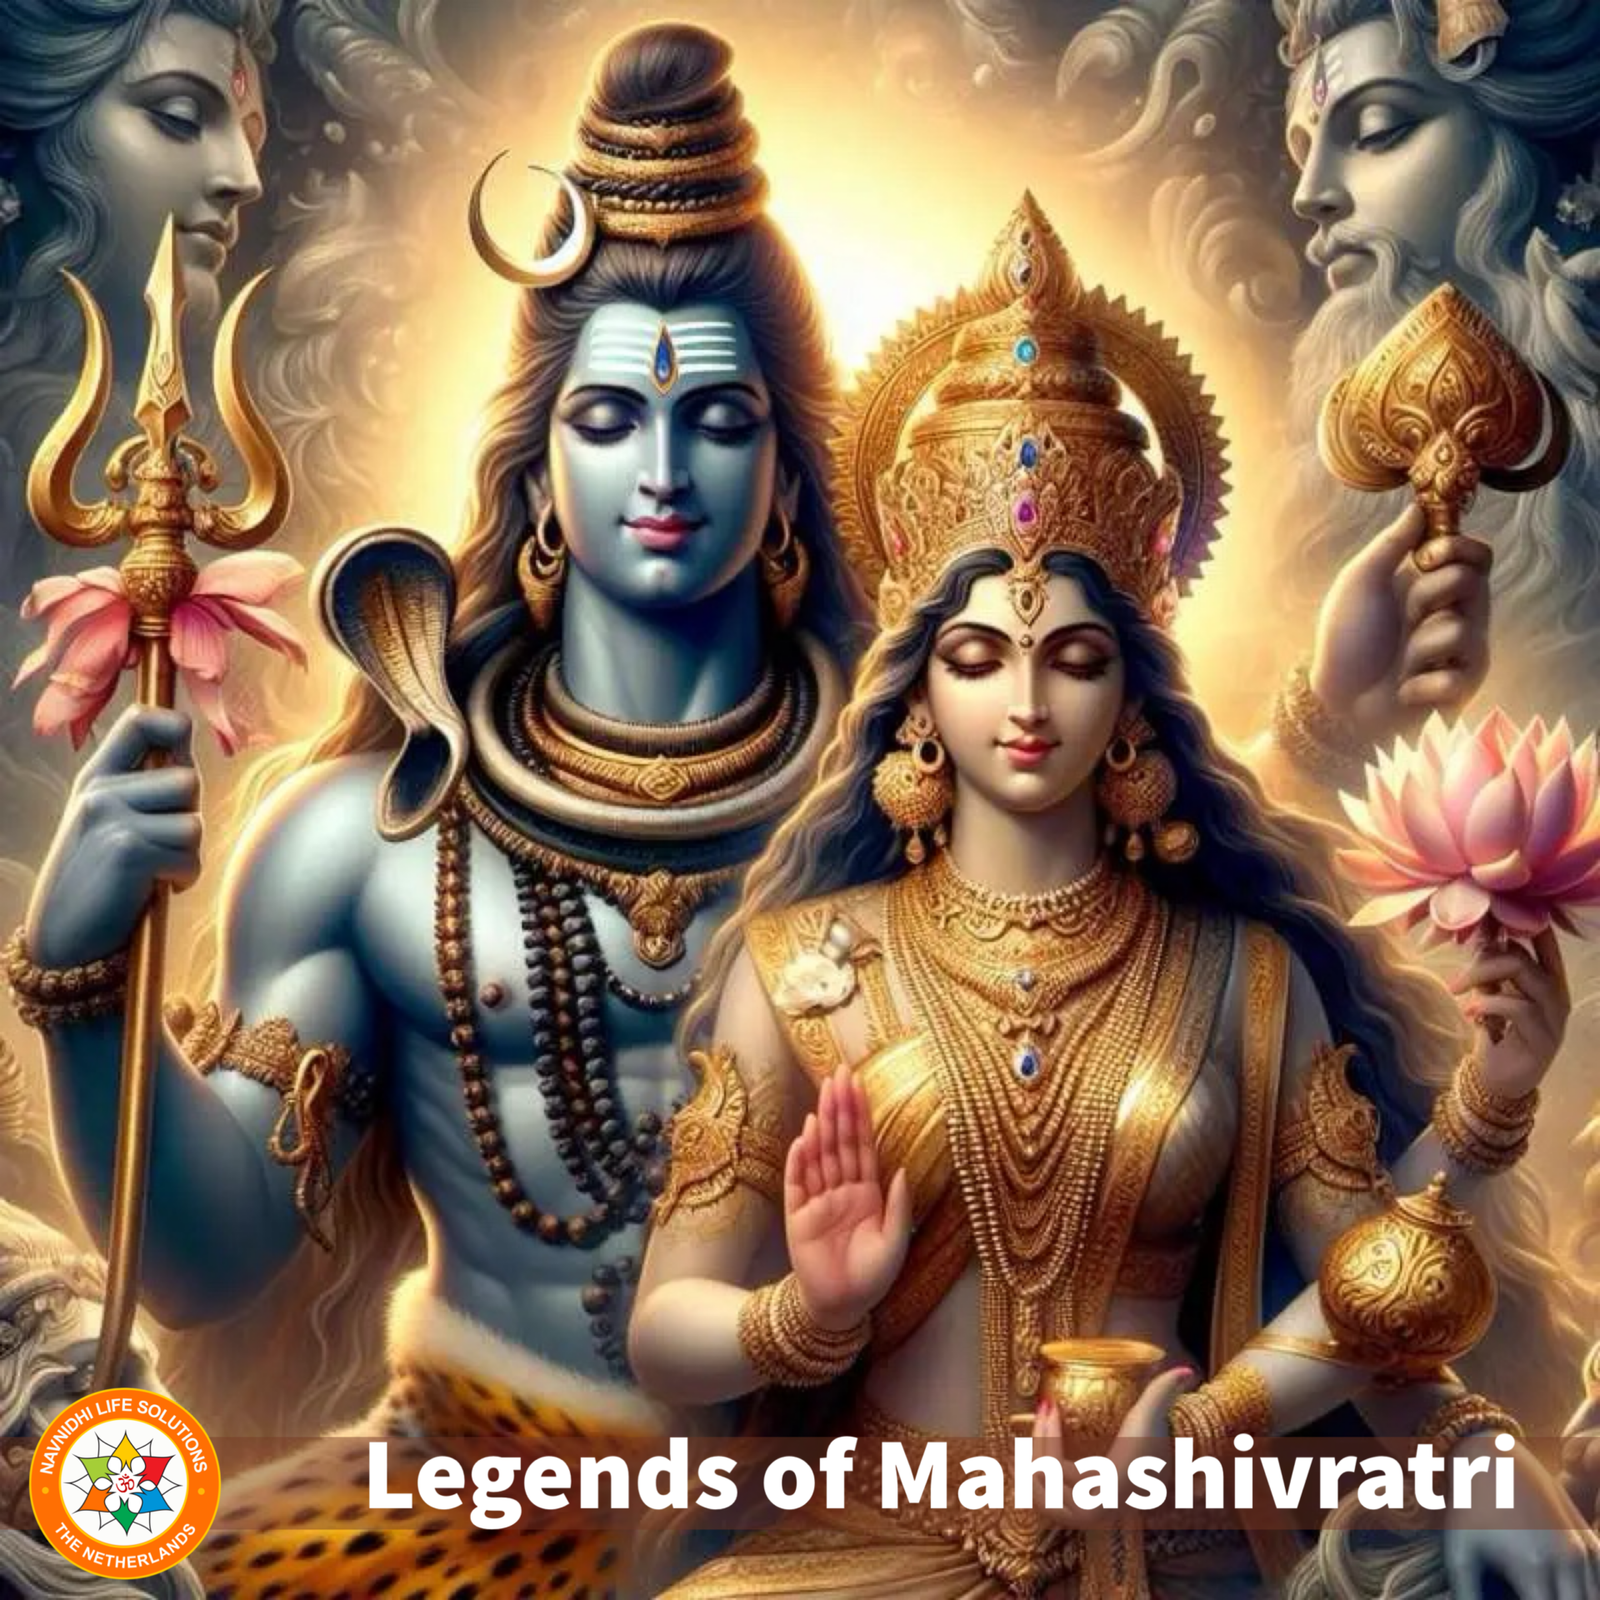 6 legends of MahaShivratri